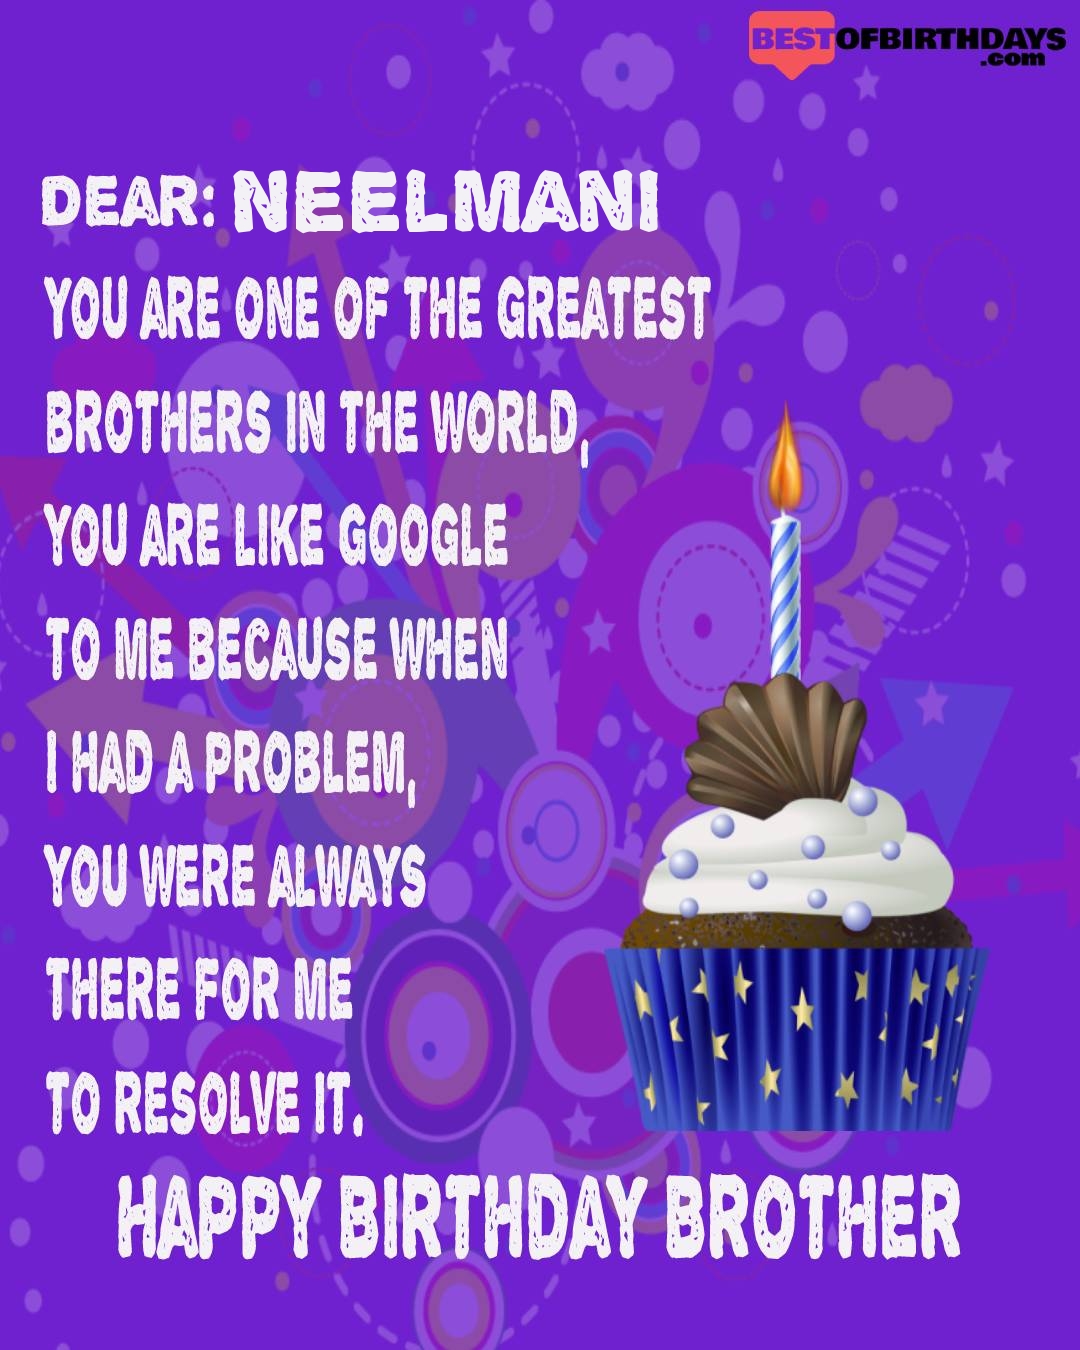 Happy birthday neelmani bhai brother bro